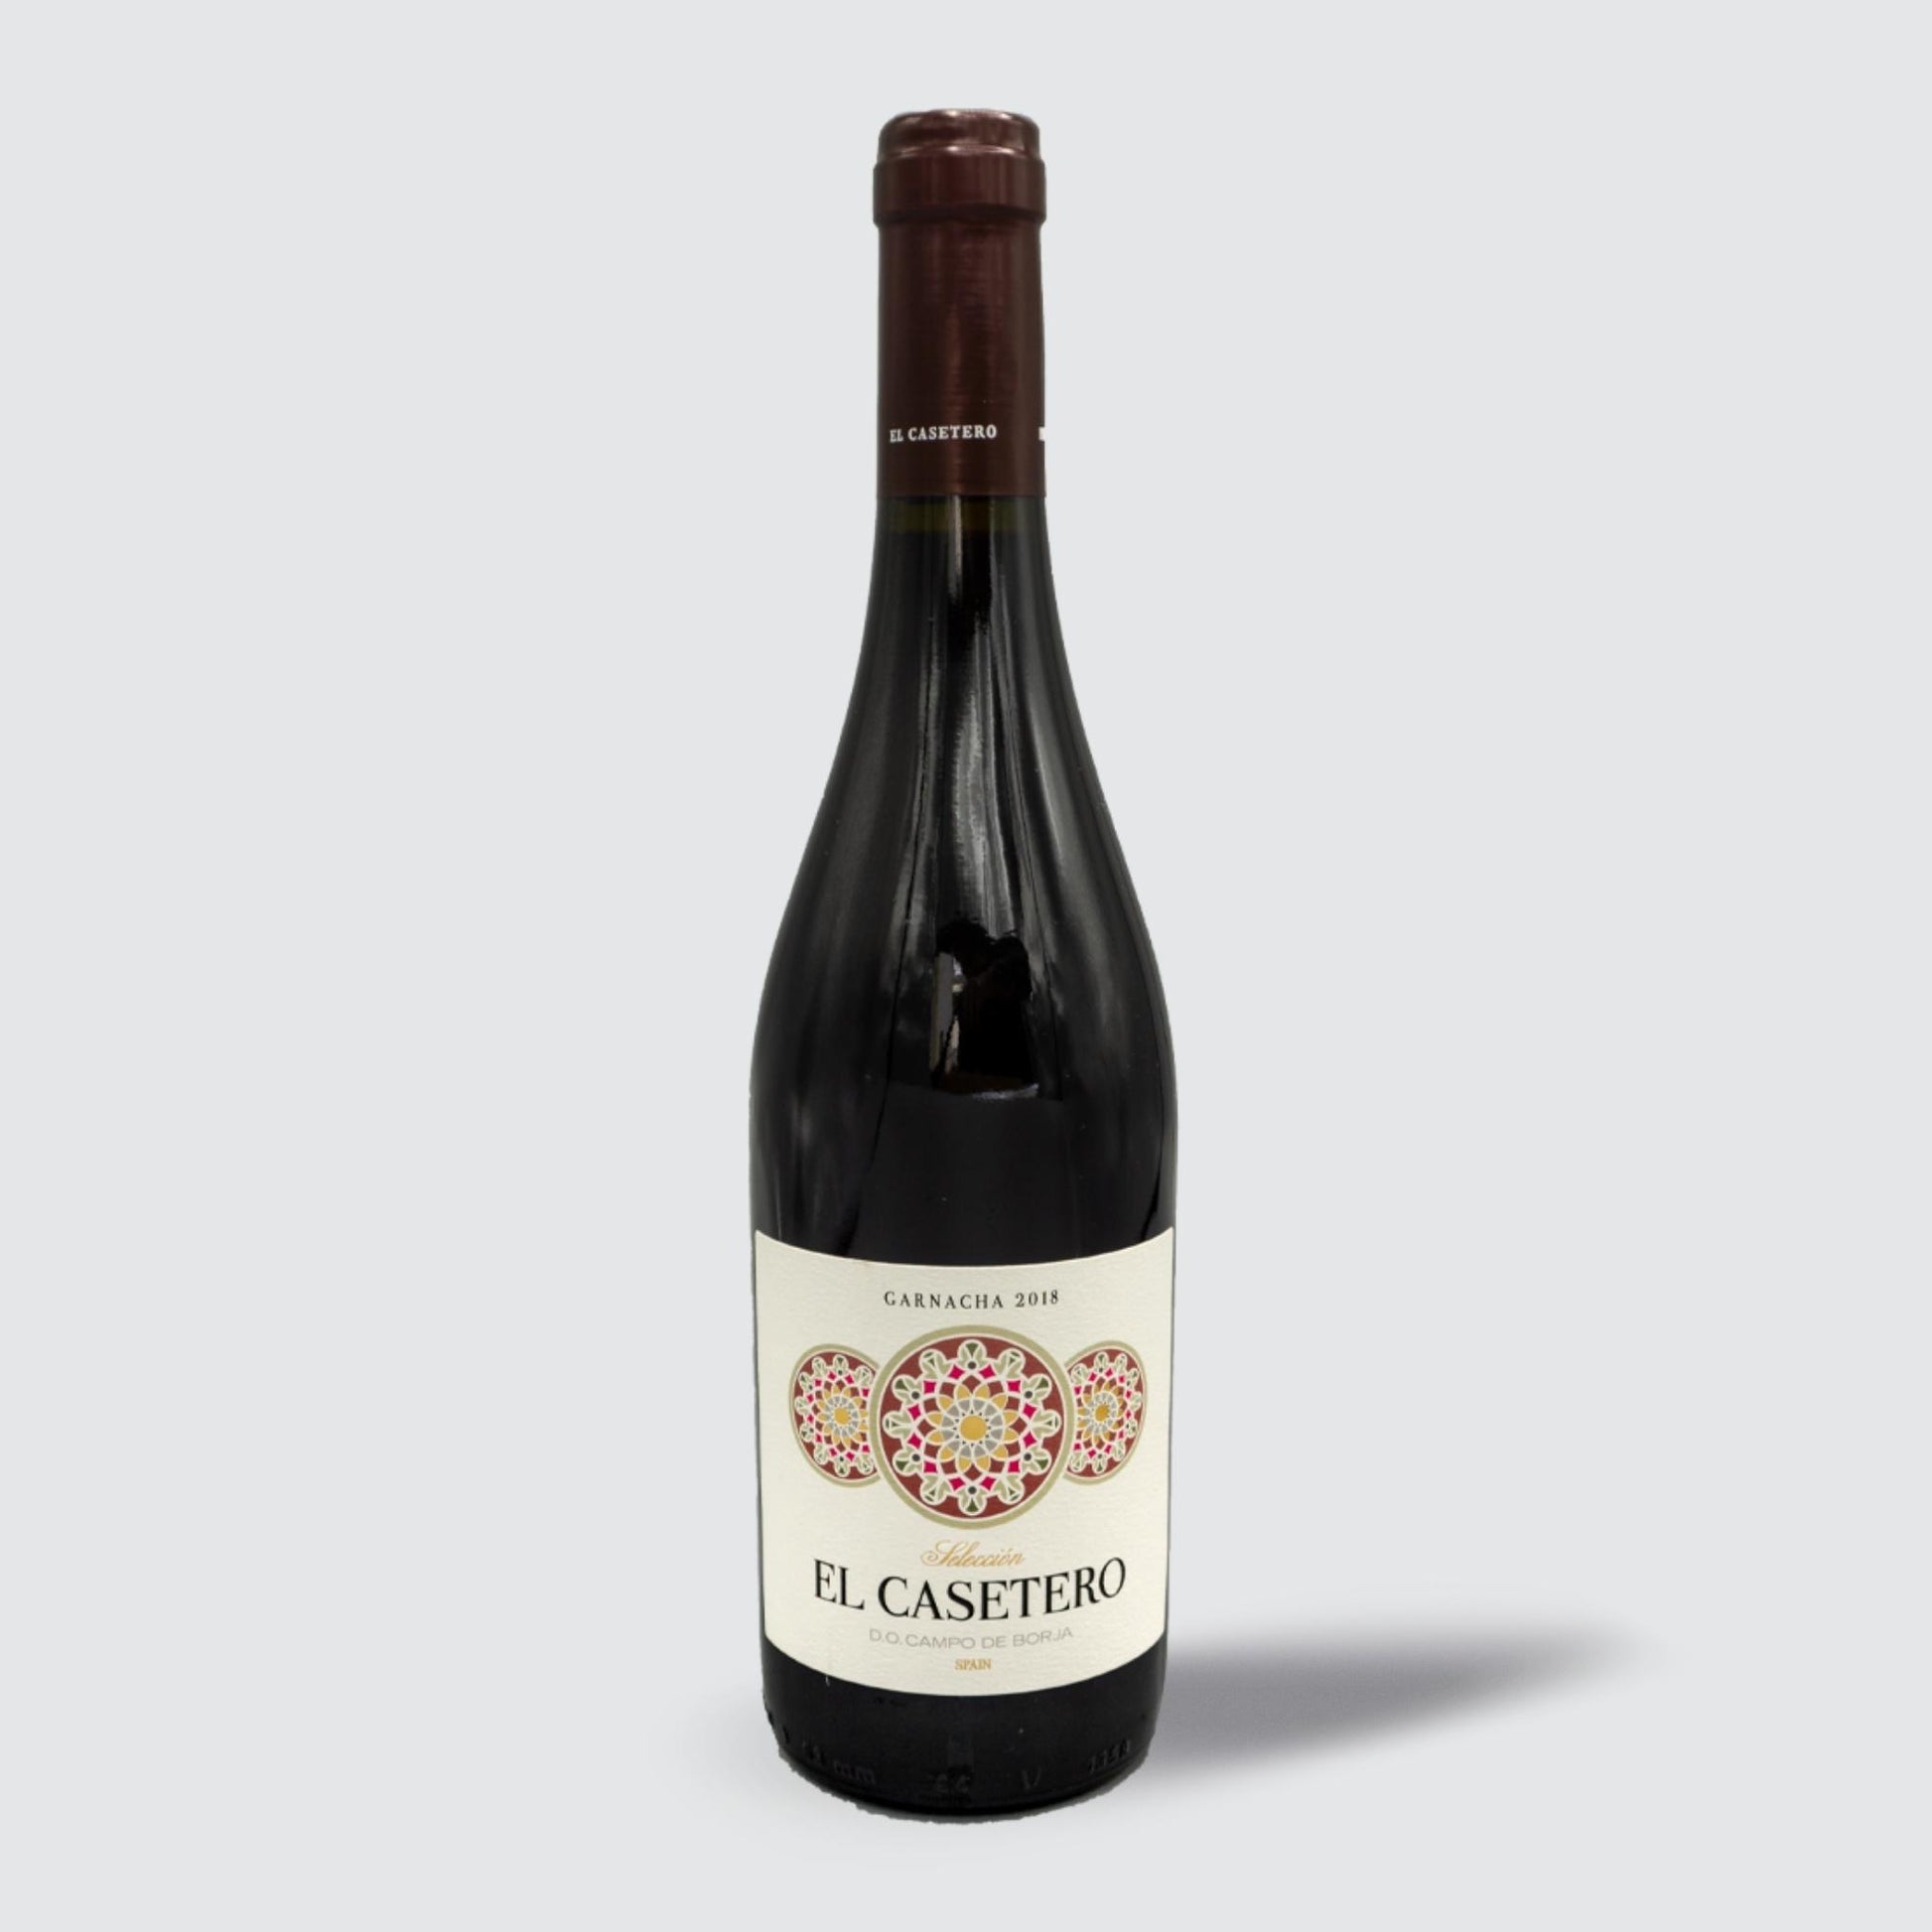 Bodegas Frontonio El Casetero Old Vines grenache 2018 Red Wine